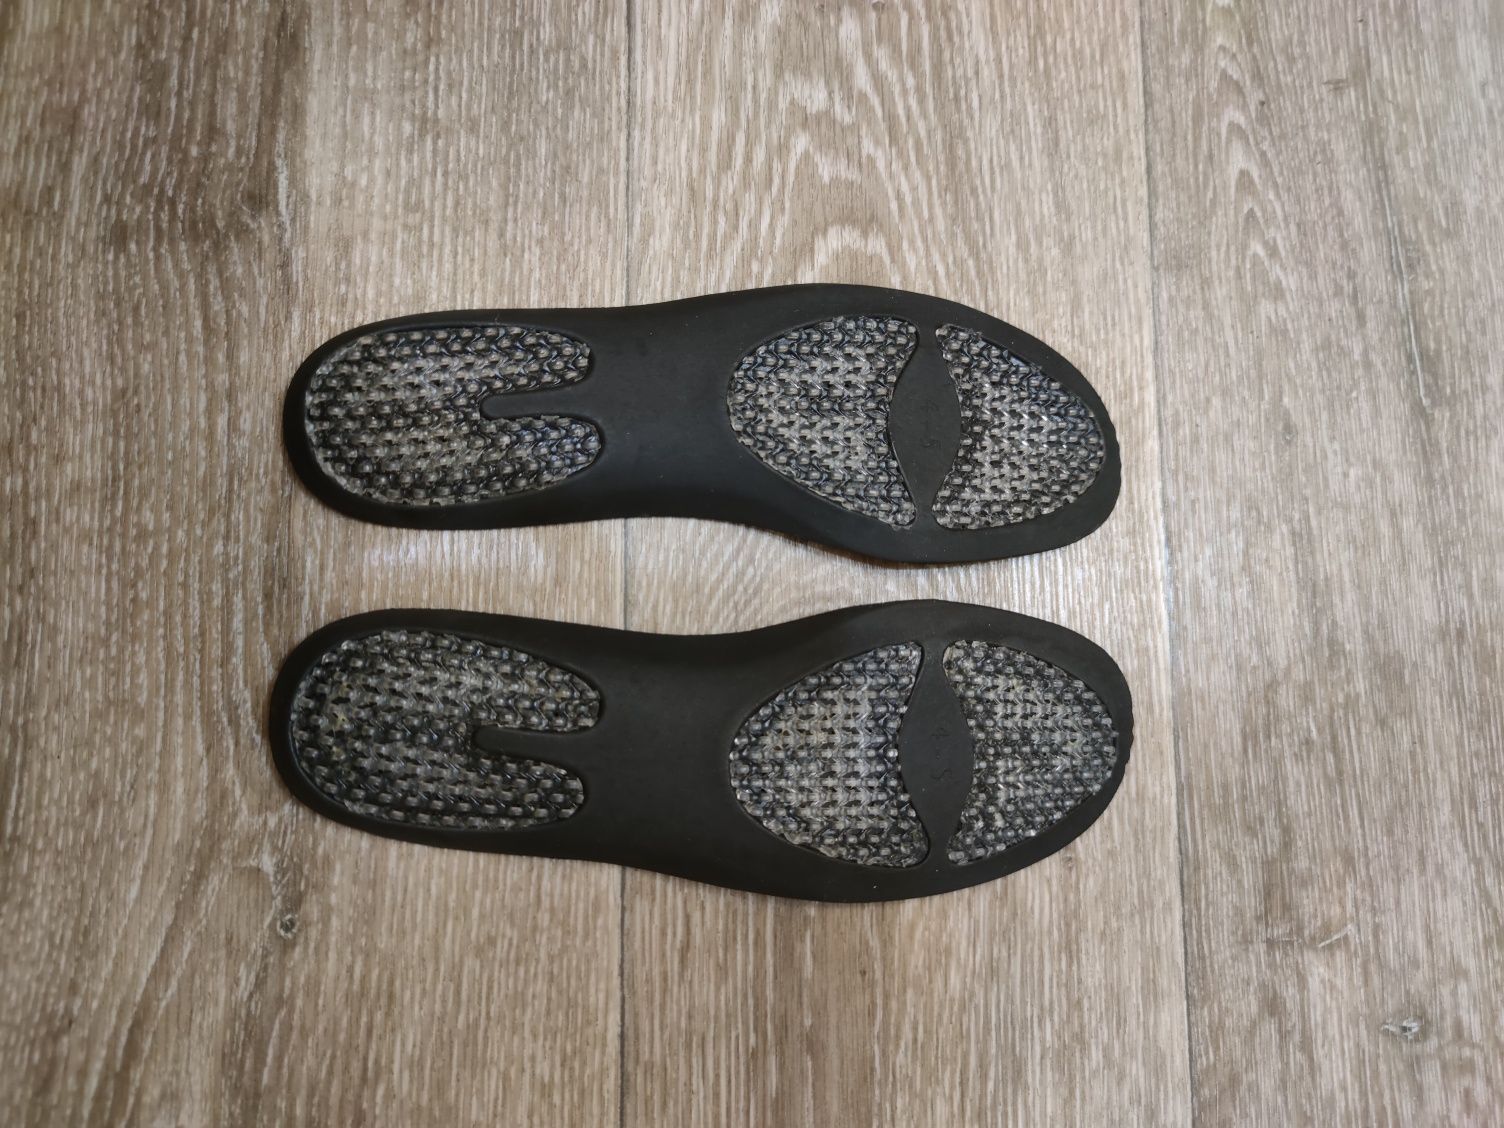 Термо ботинки ara